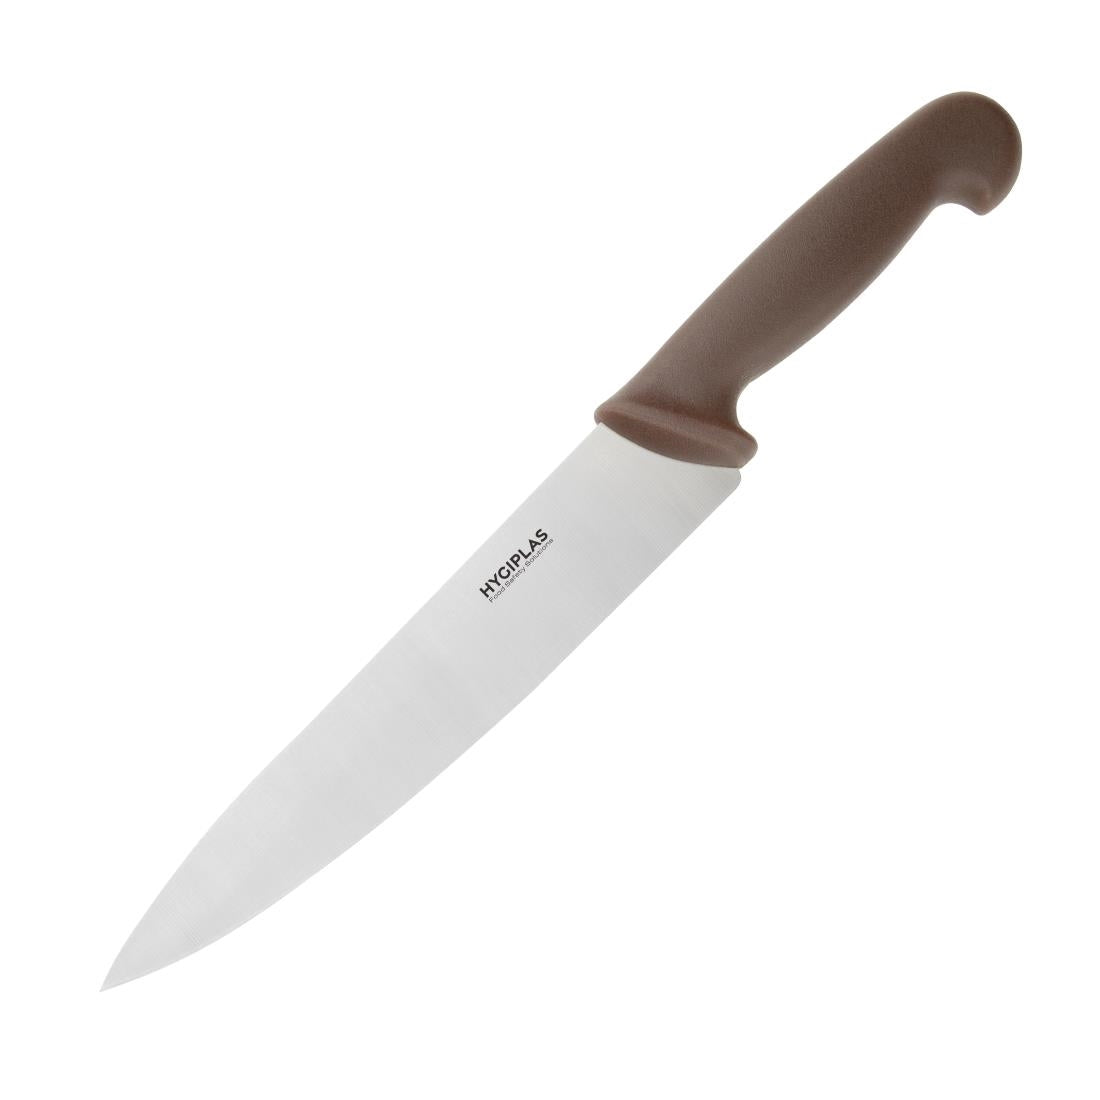 C842 Hygiplas Chef Knife Brown 21.5cm JD Catering Equipment Solutions Ltd